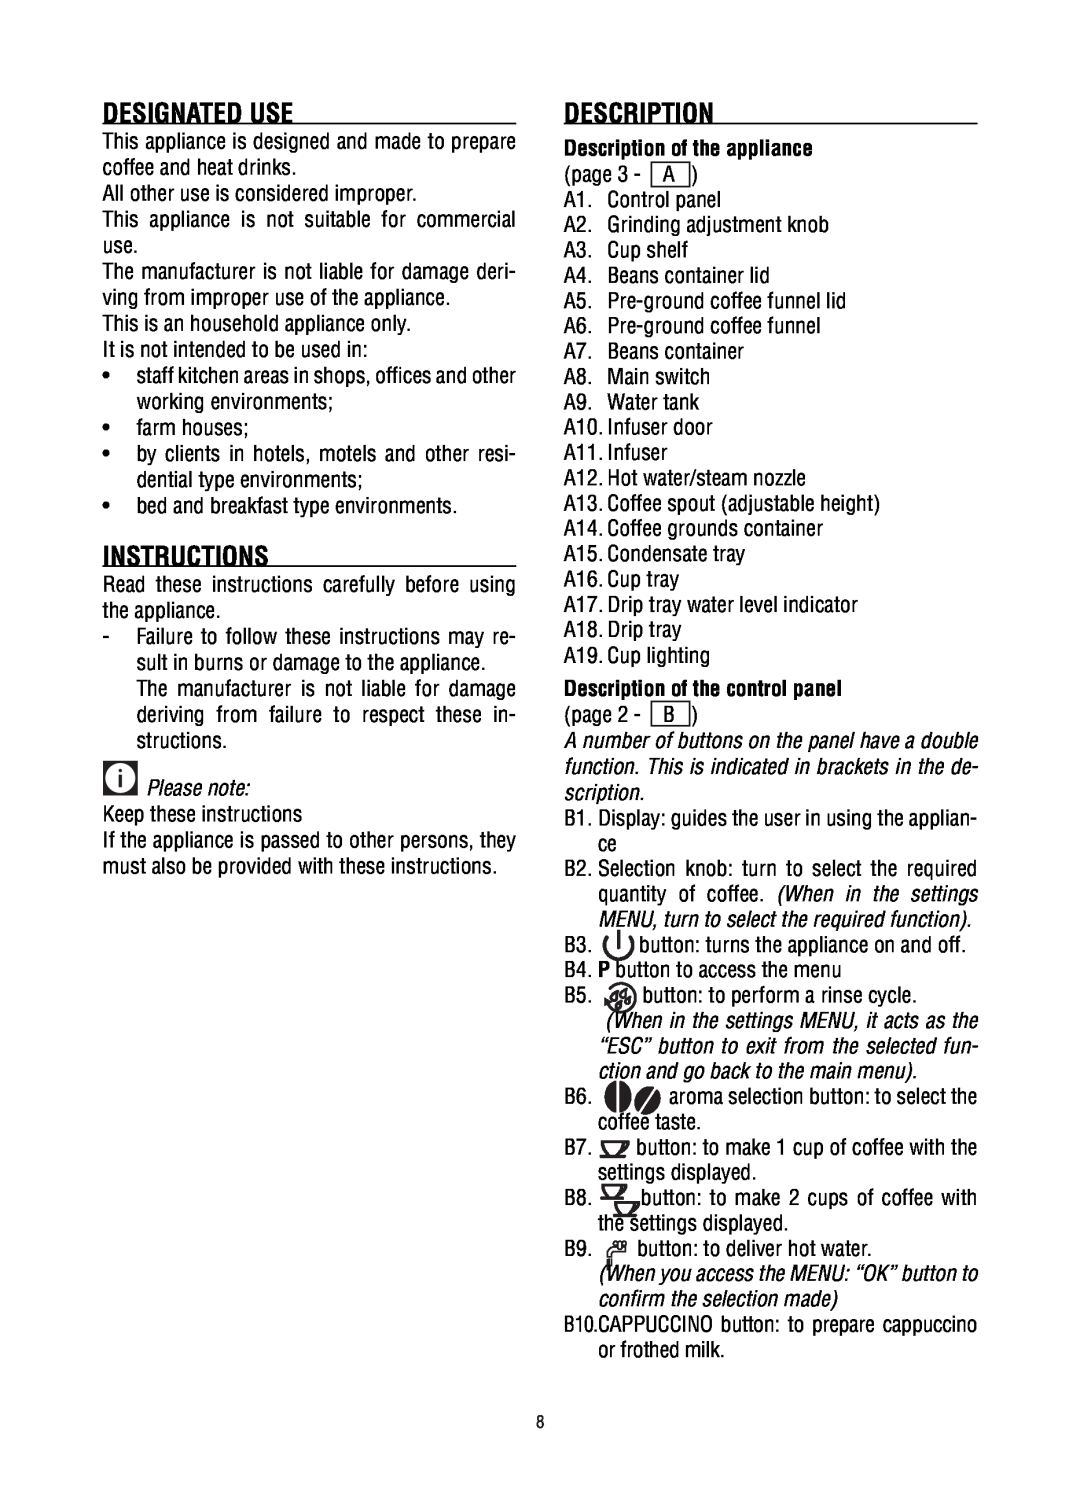 DeLonghi ECAM23.450 manual Designated Use, Instructions, Description of the appliance 